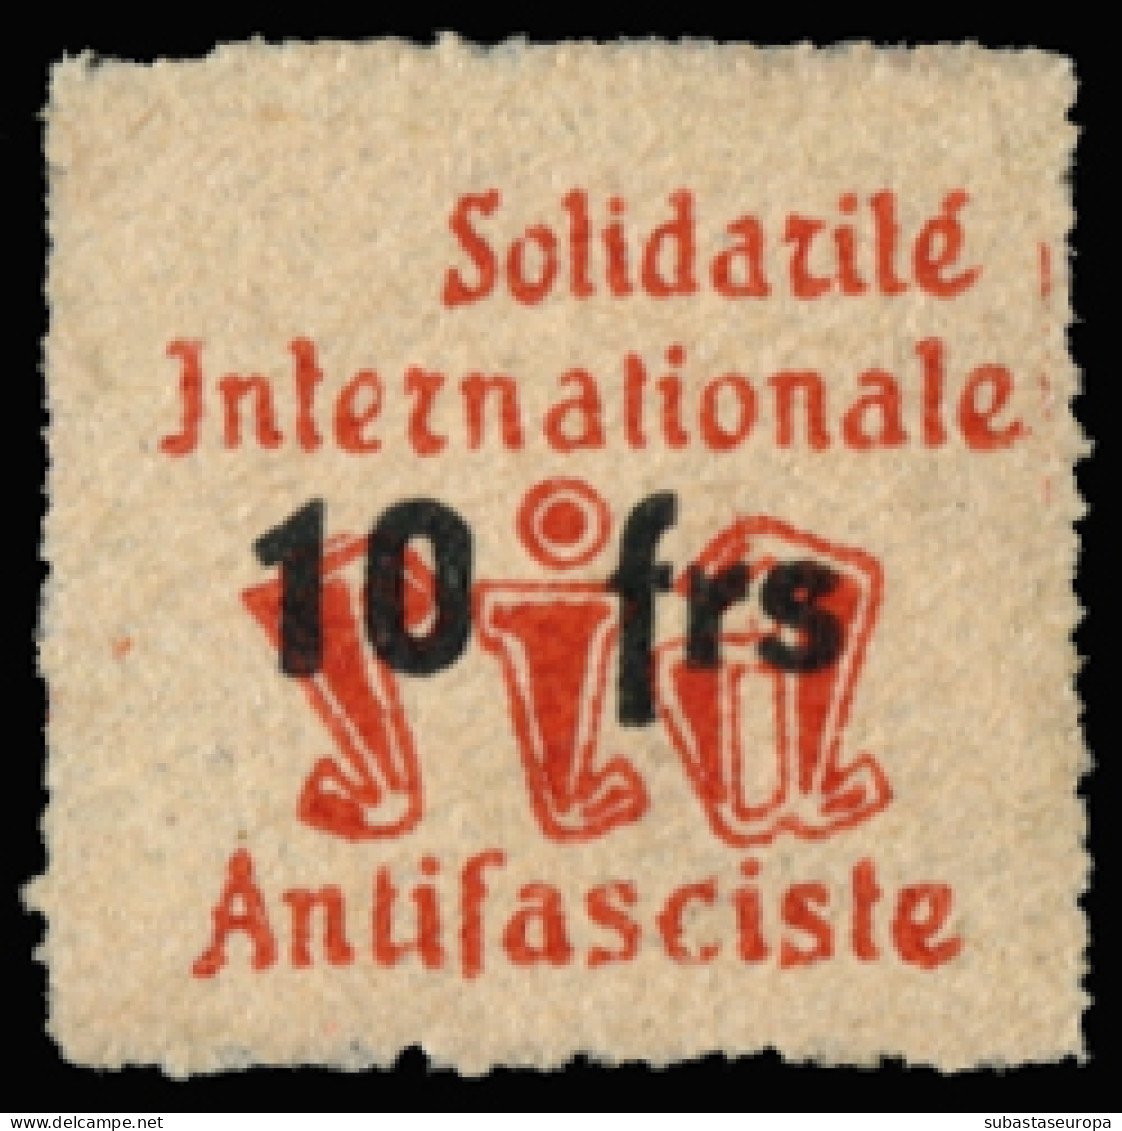 Francia. SIA. 10 Fr. Color Rojo. Rara. - Spanish Civil War Labels